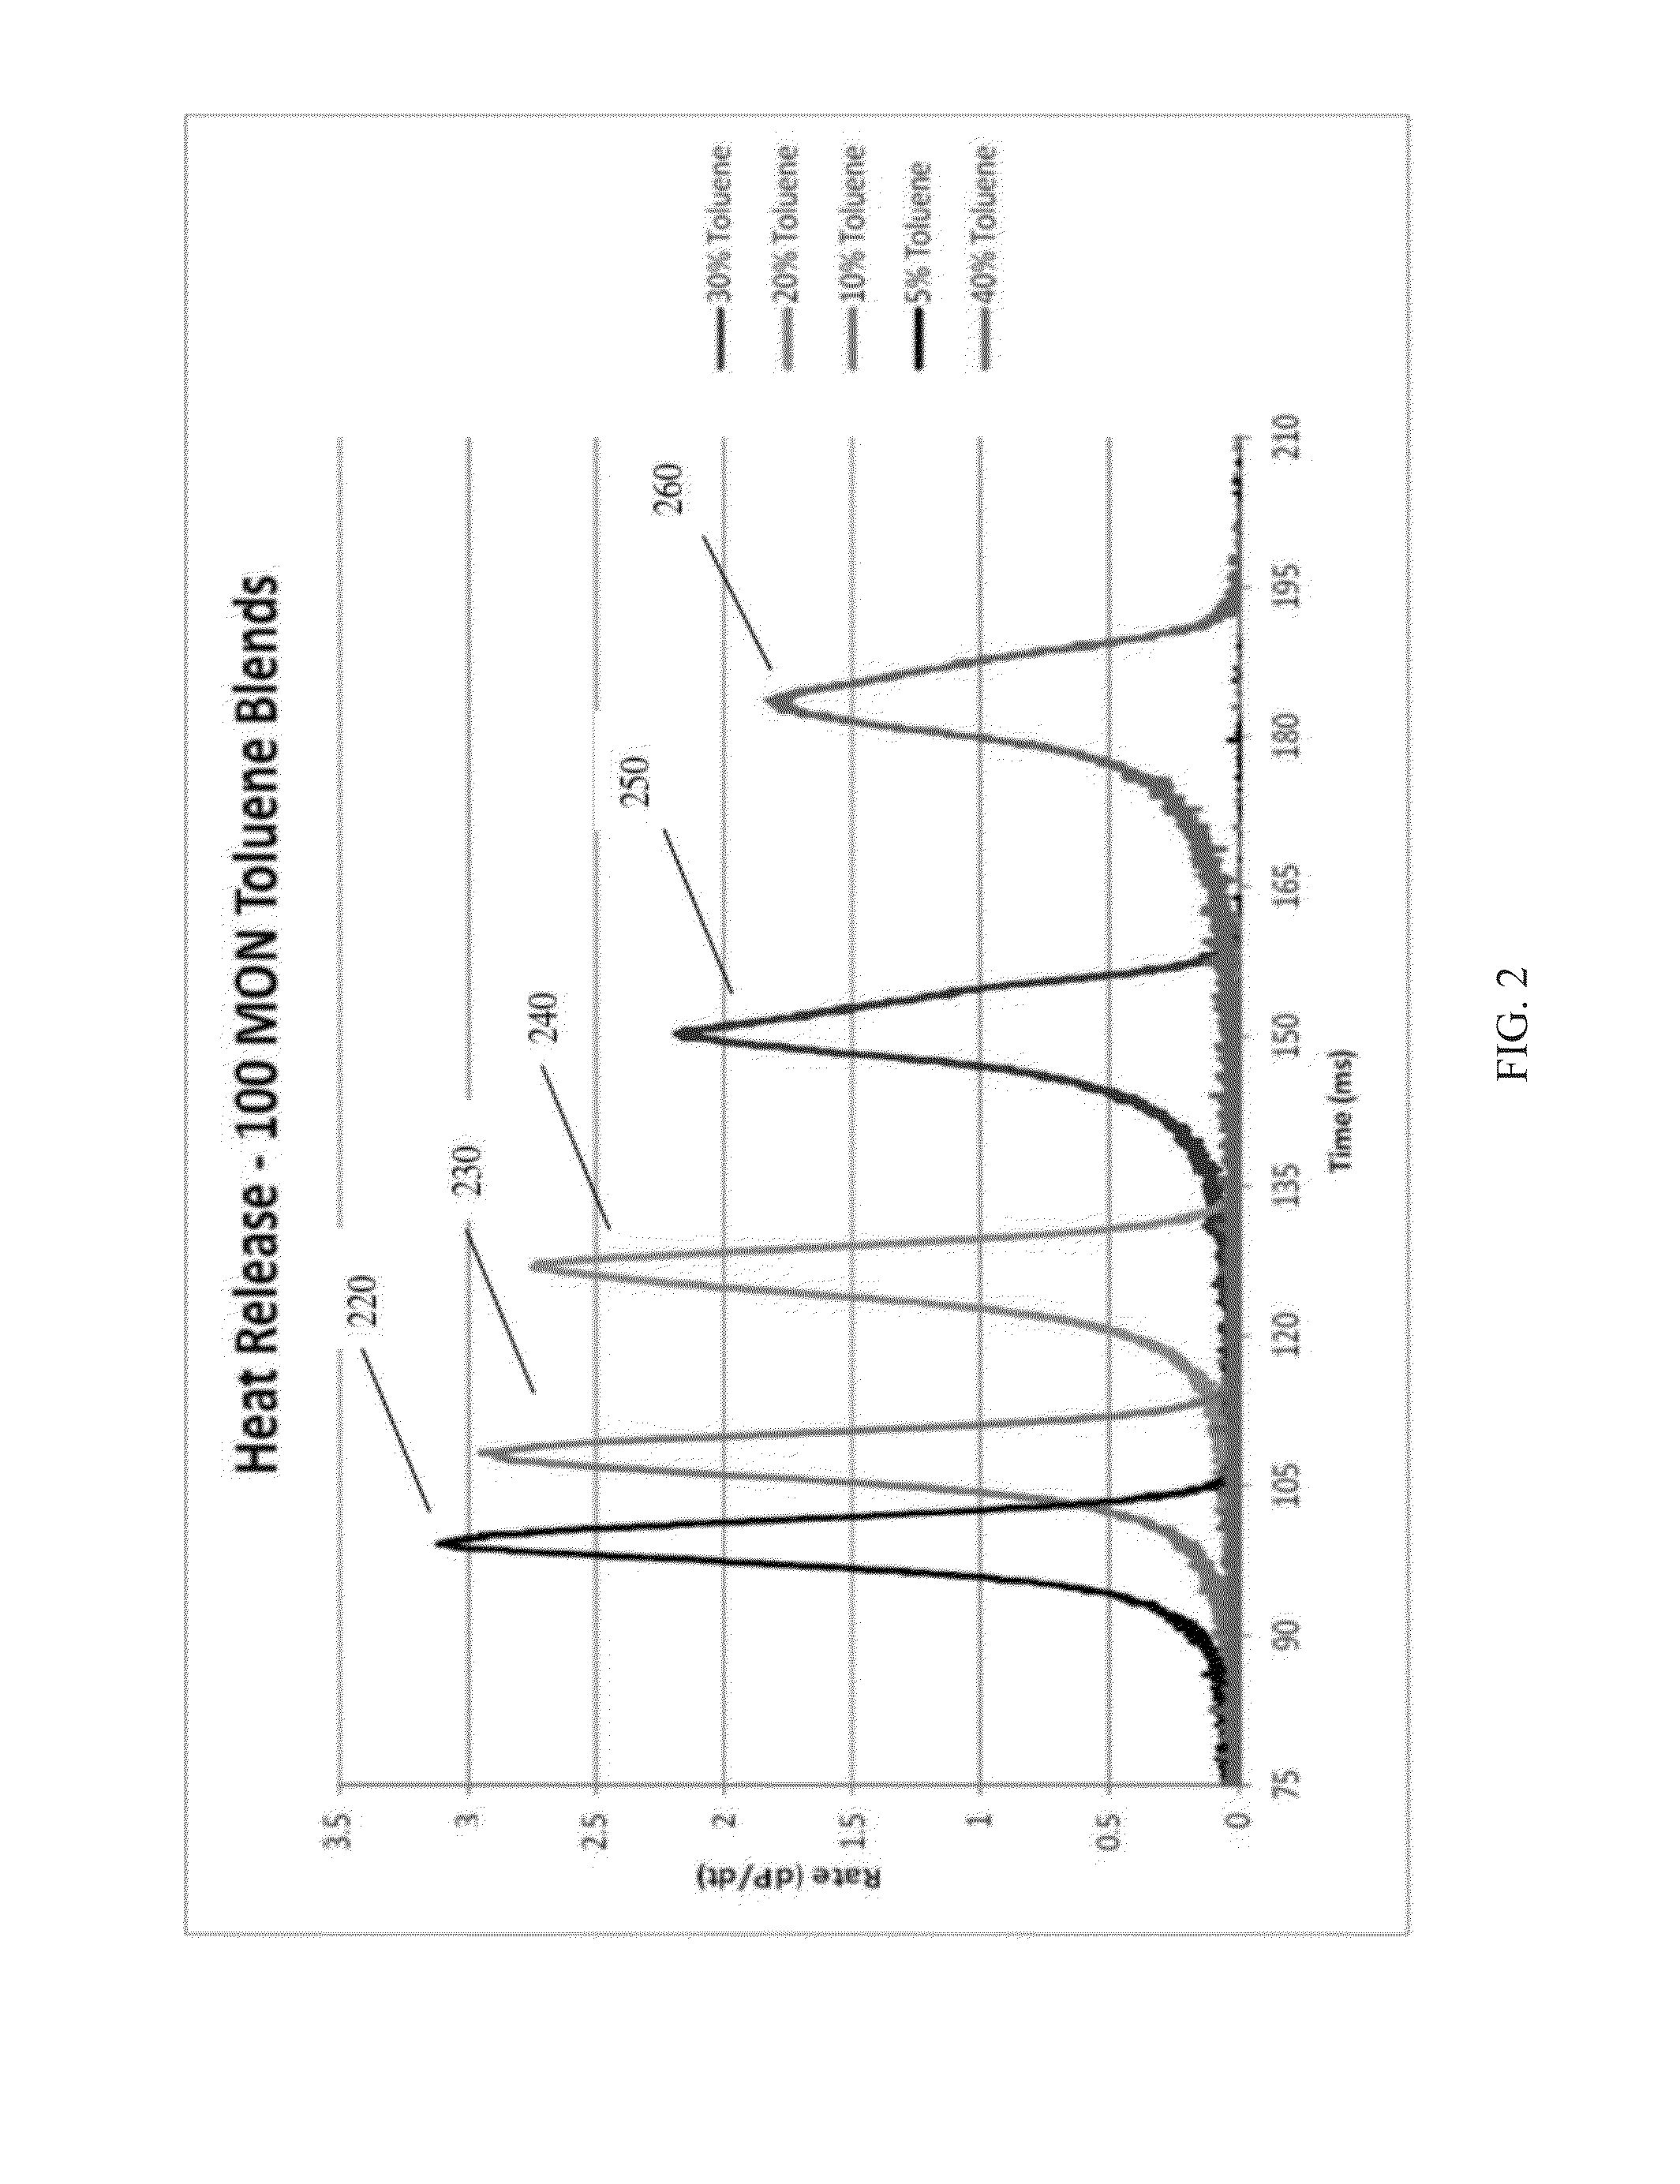 Characterization of aviation gasoline